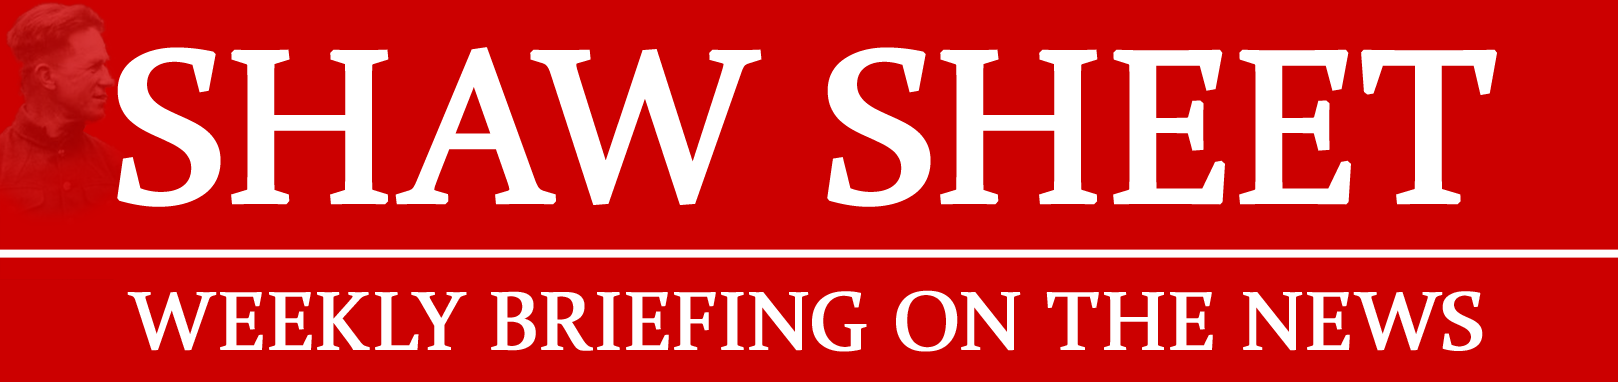 Shaw Sheet Logo 2 line briefing 1618x382 TEL profile